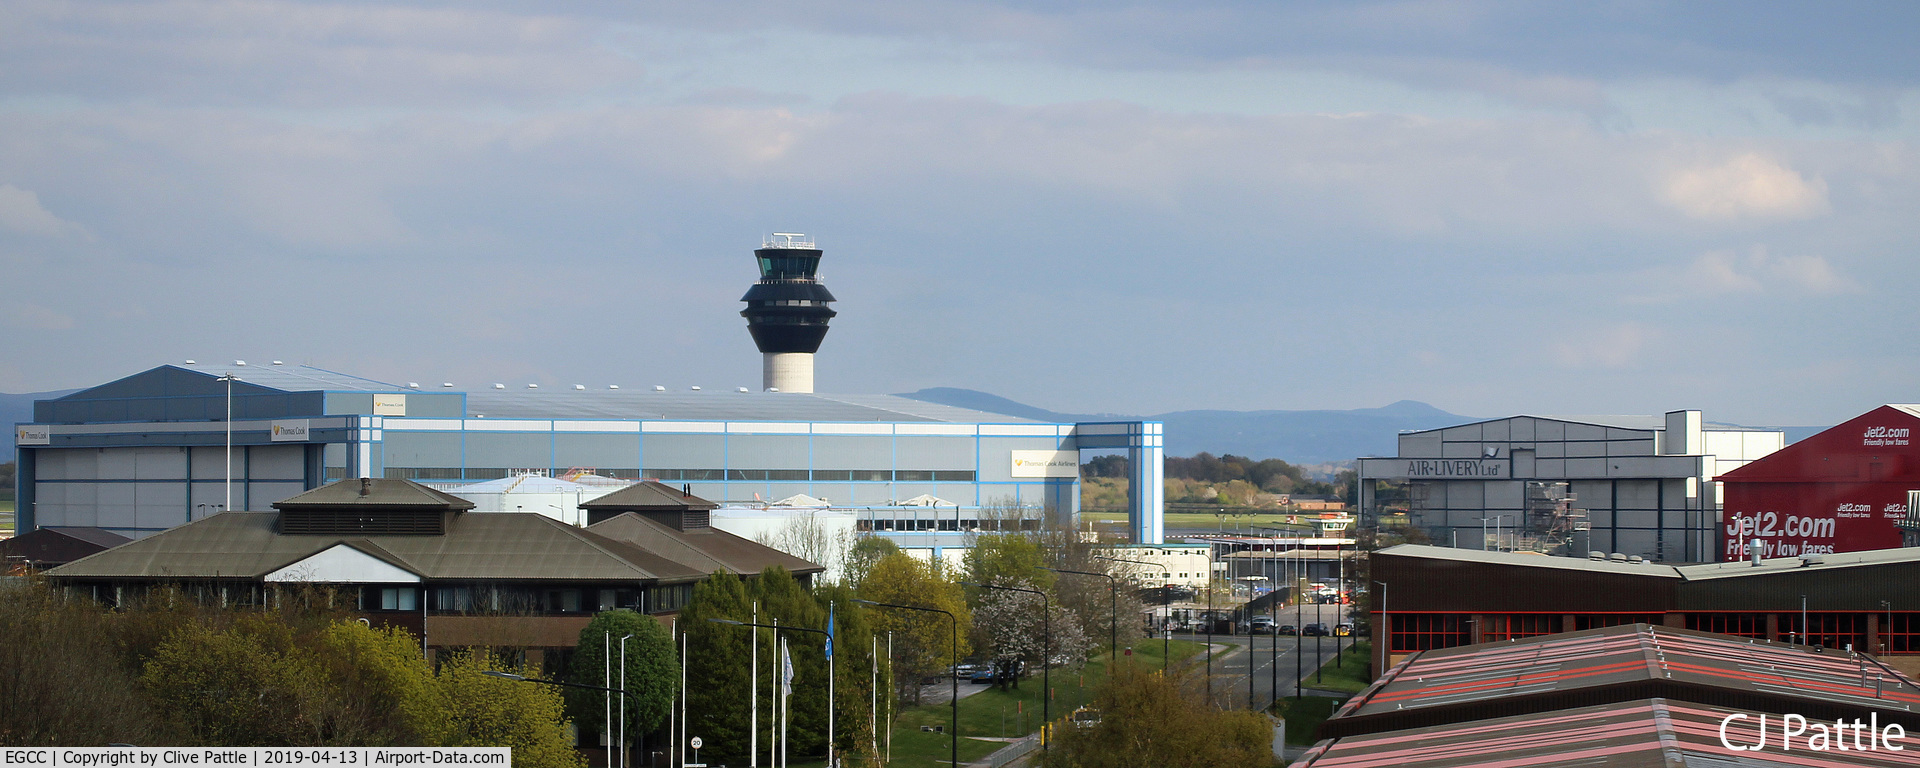 Manchester Airport, Manchester, England United Kingdom (EGCC) - Manchester view